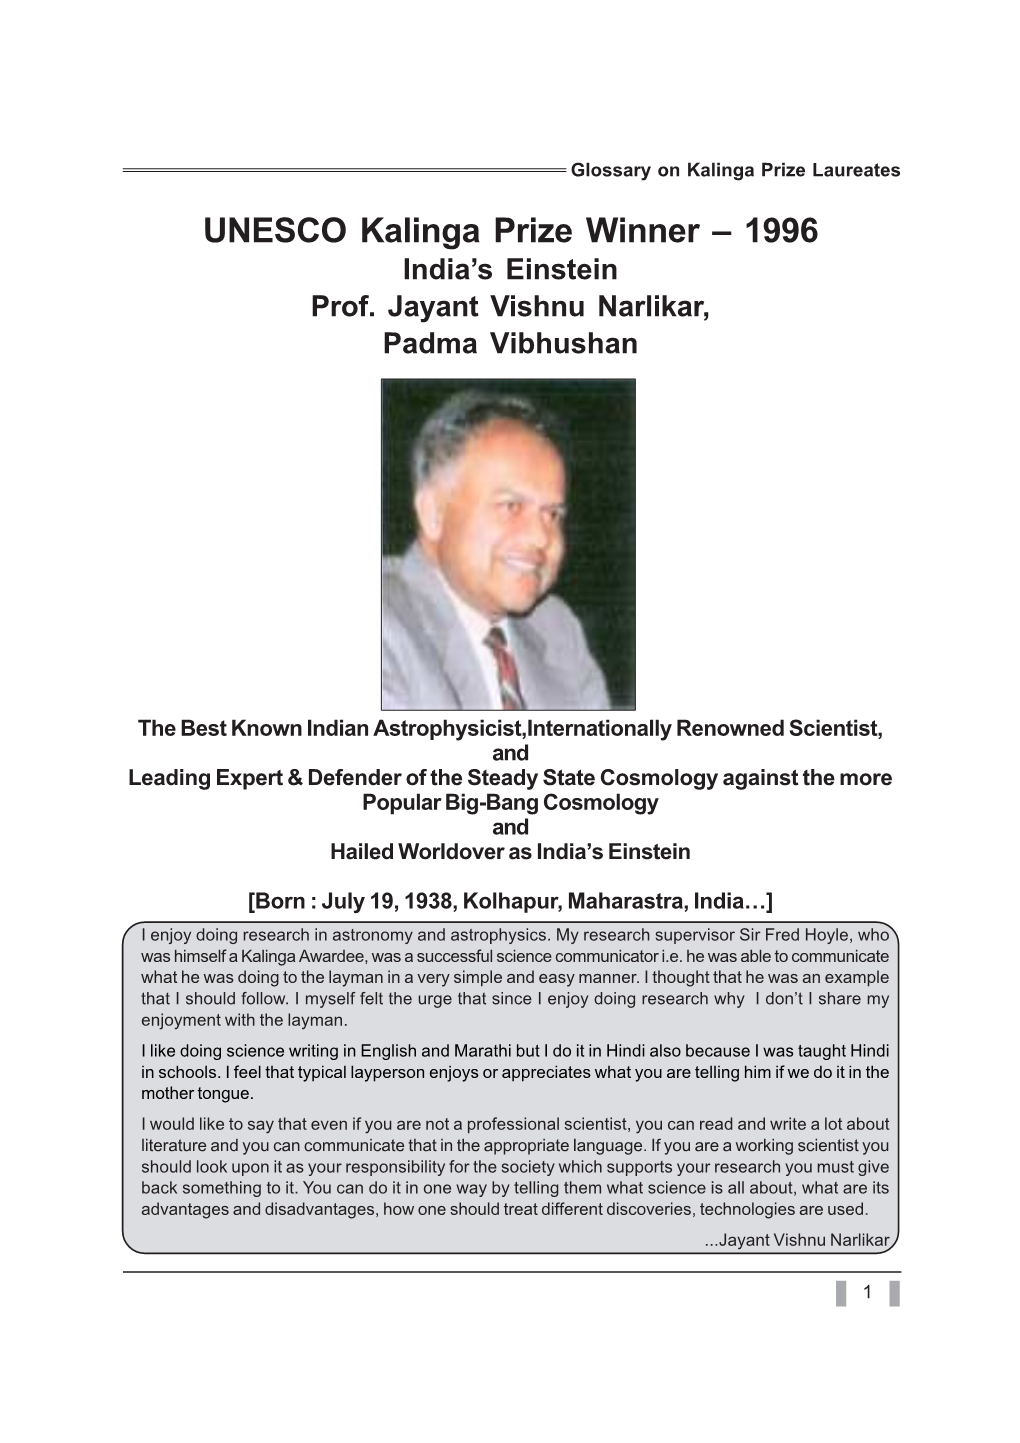 UNESCO Kalinga Prize Winner – 1996 India's Einstein Prof. Jayant